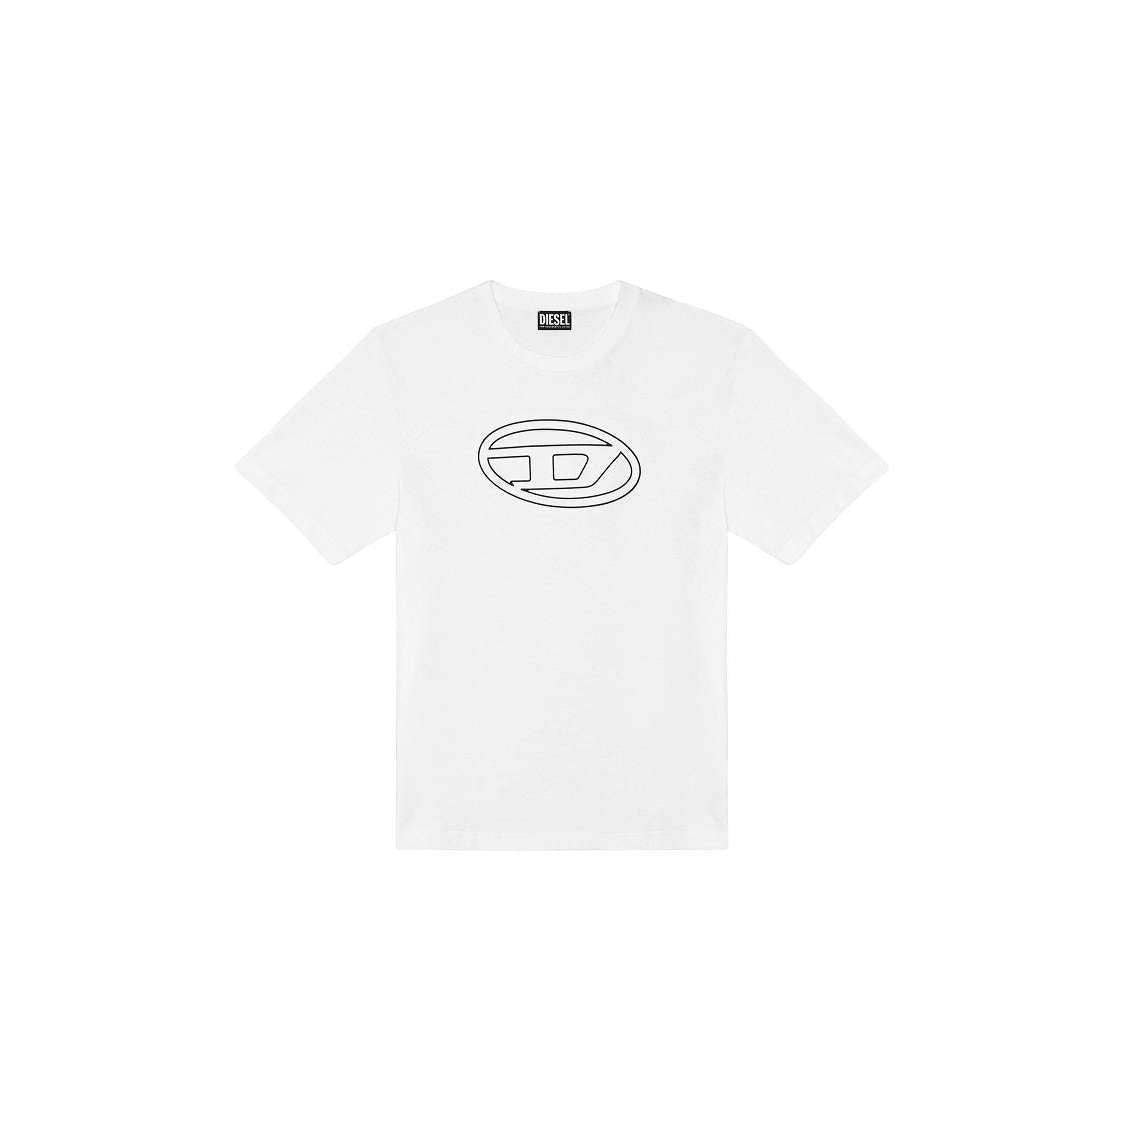 Diesel Uomo T-shirt t-just-bigoval A03789-0BEAF 100